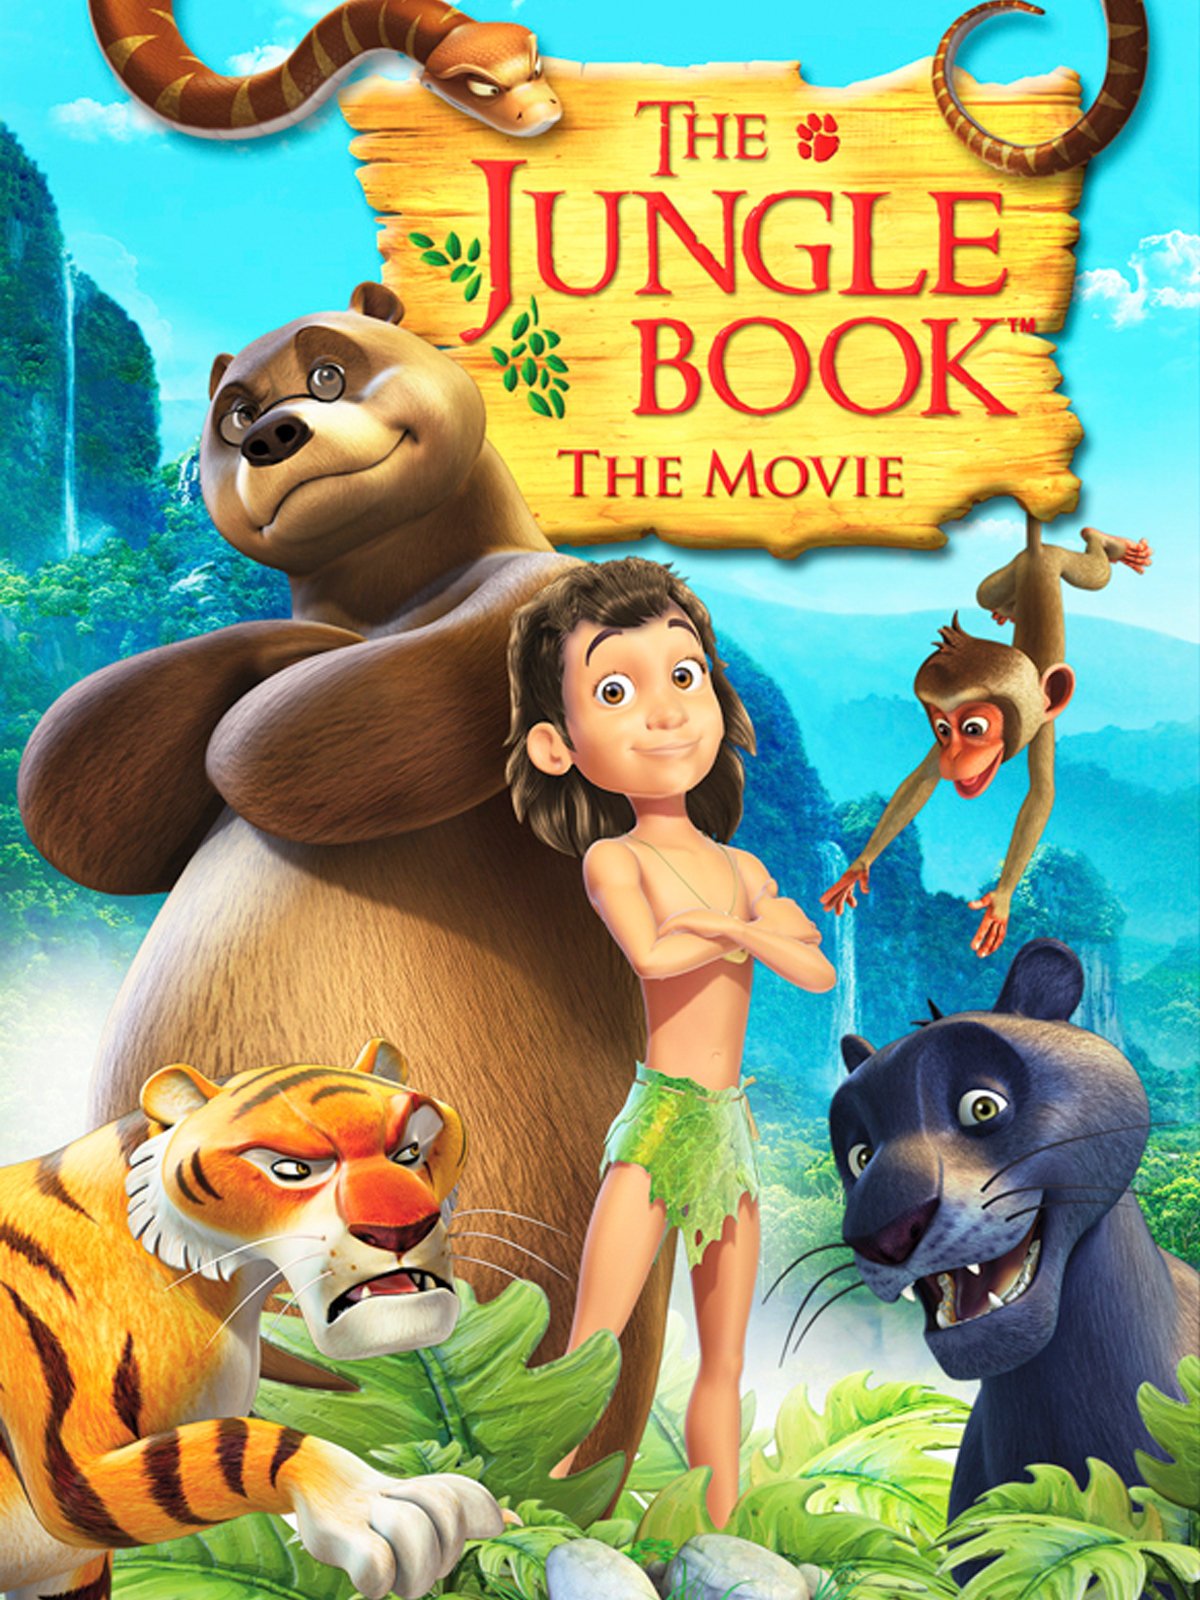 britney nicole recommends Download Jungle Book Movie